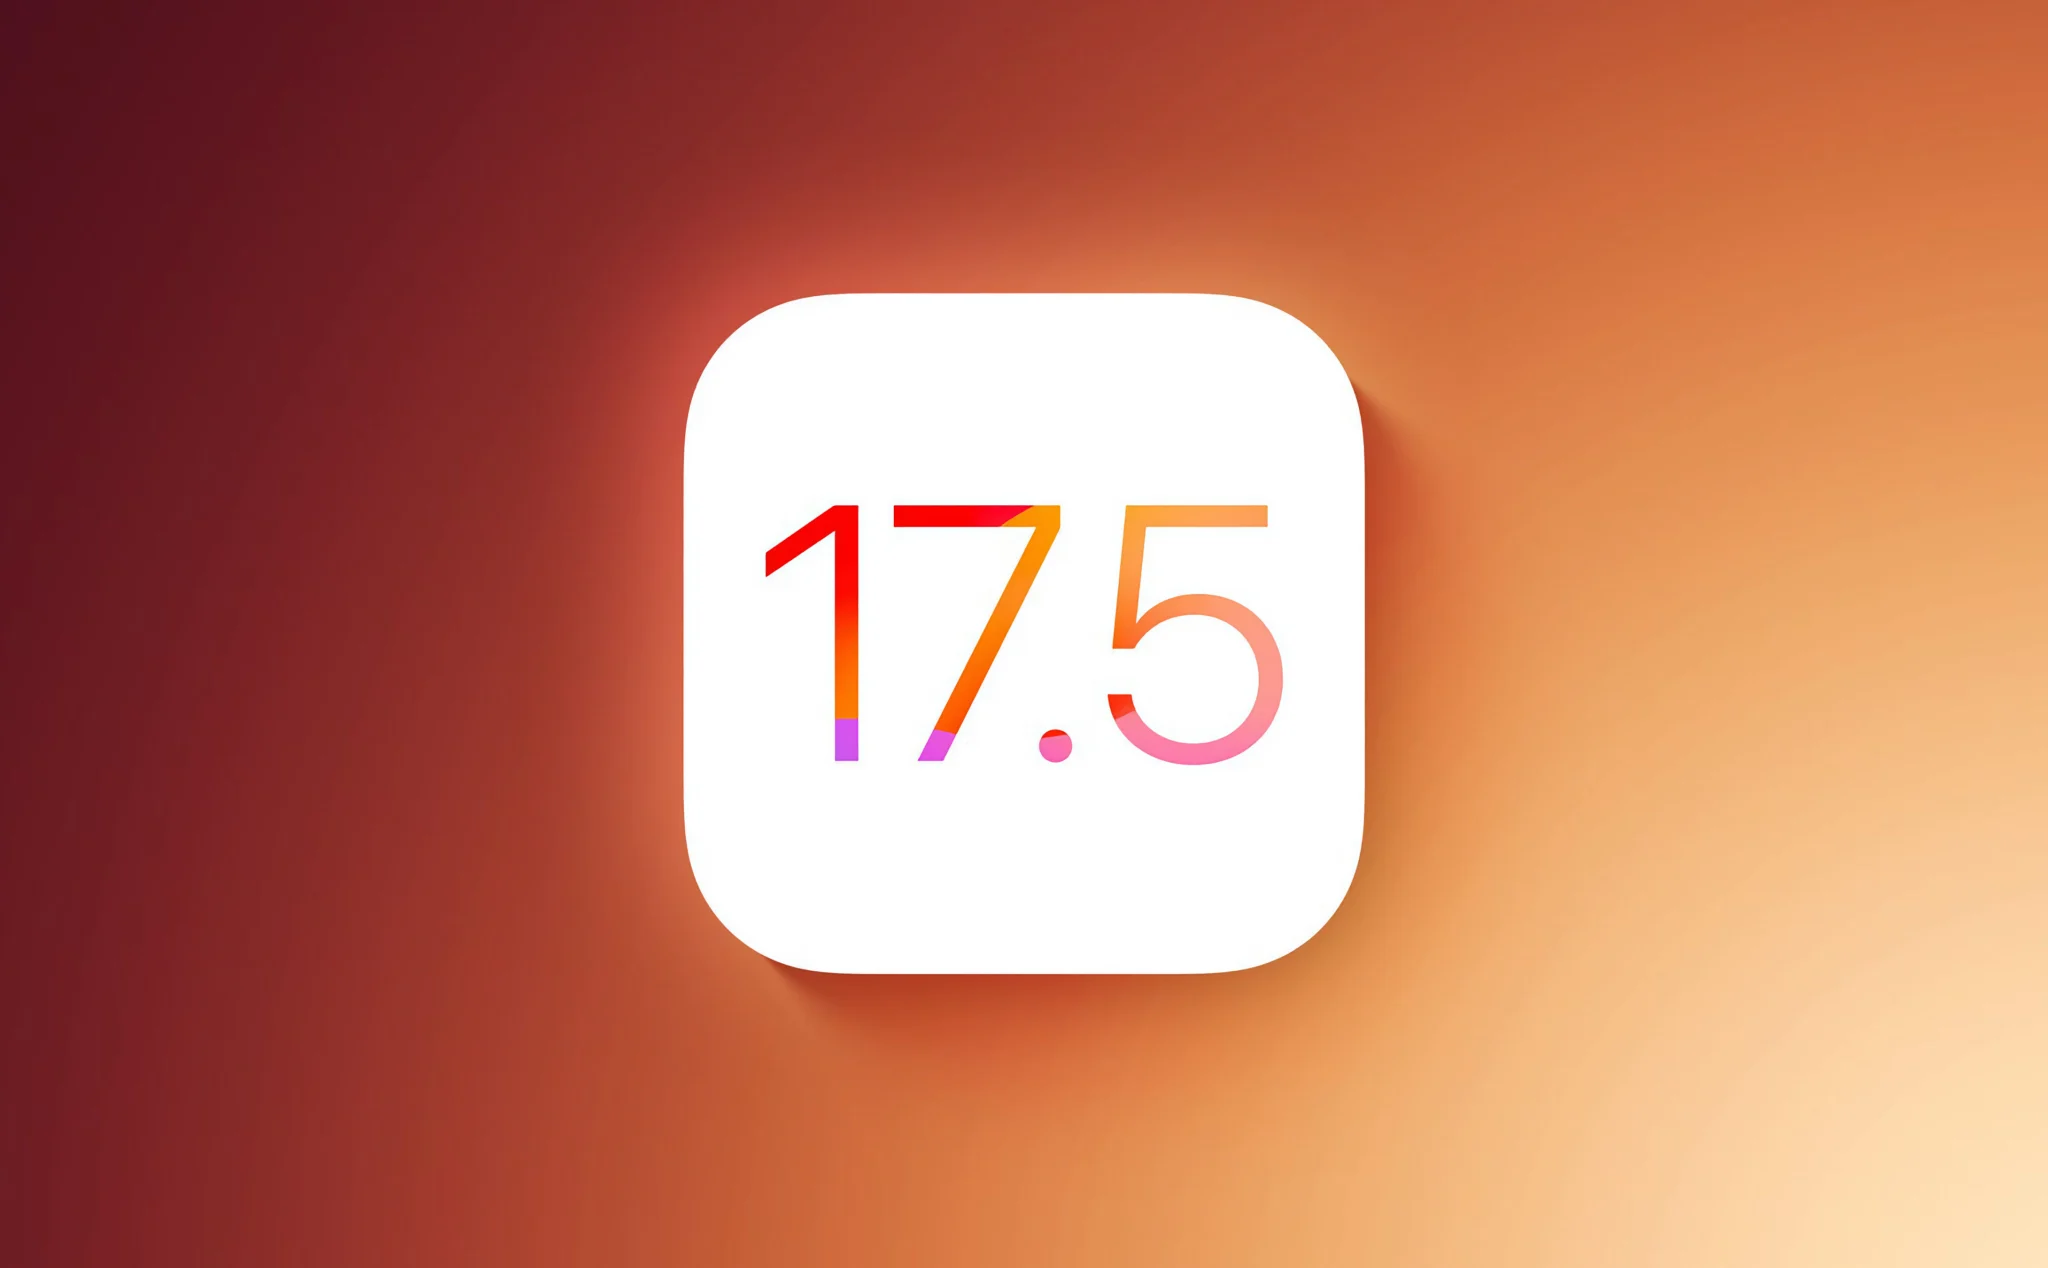 Apple phát hành iOS 17.5 Public Beta 2